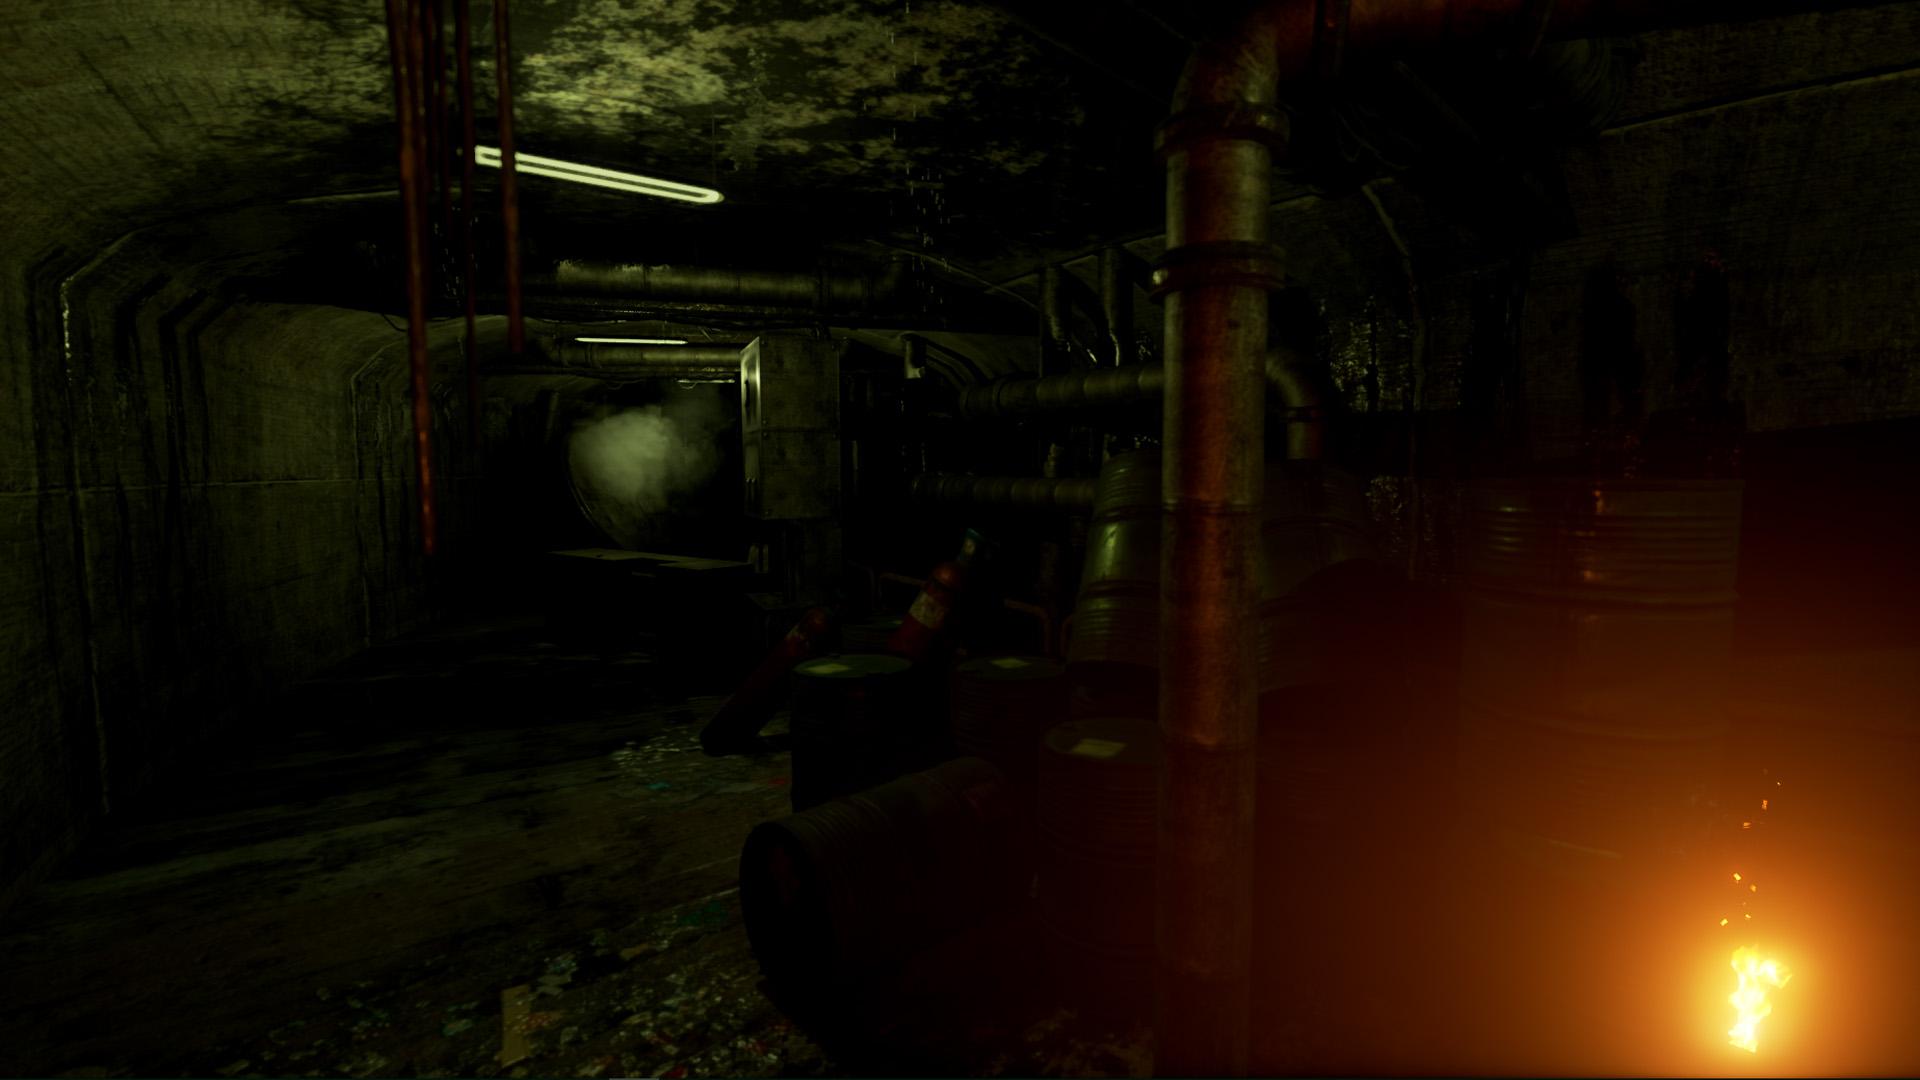 Screenshot №6 from game Amigdala